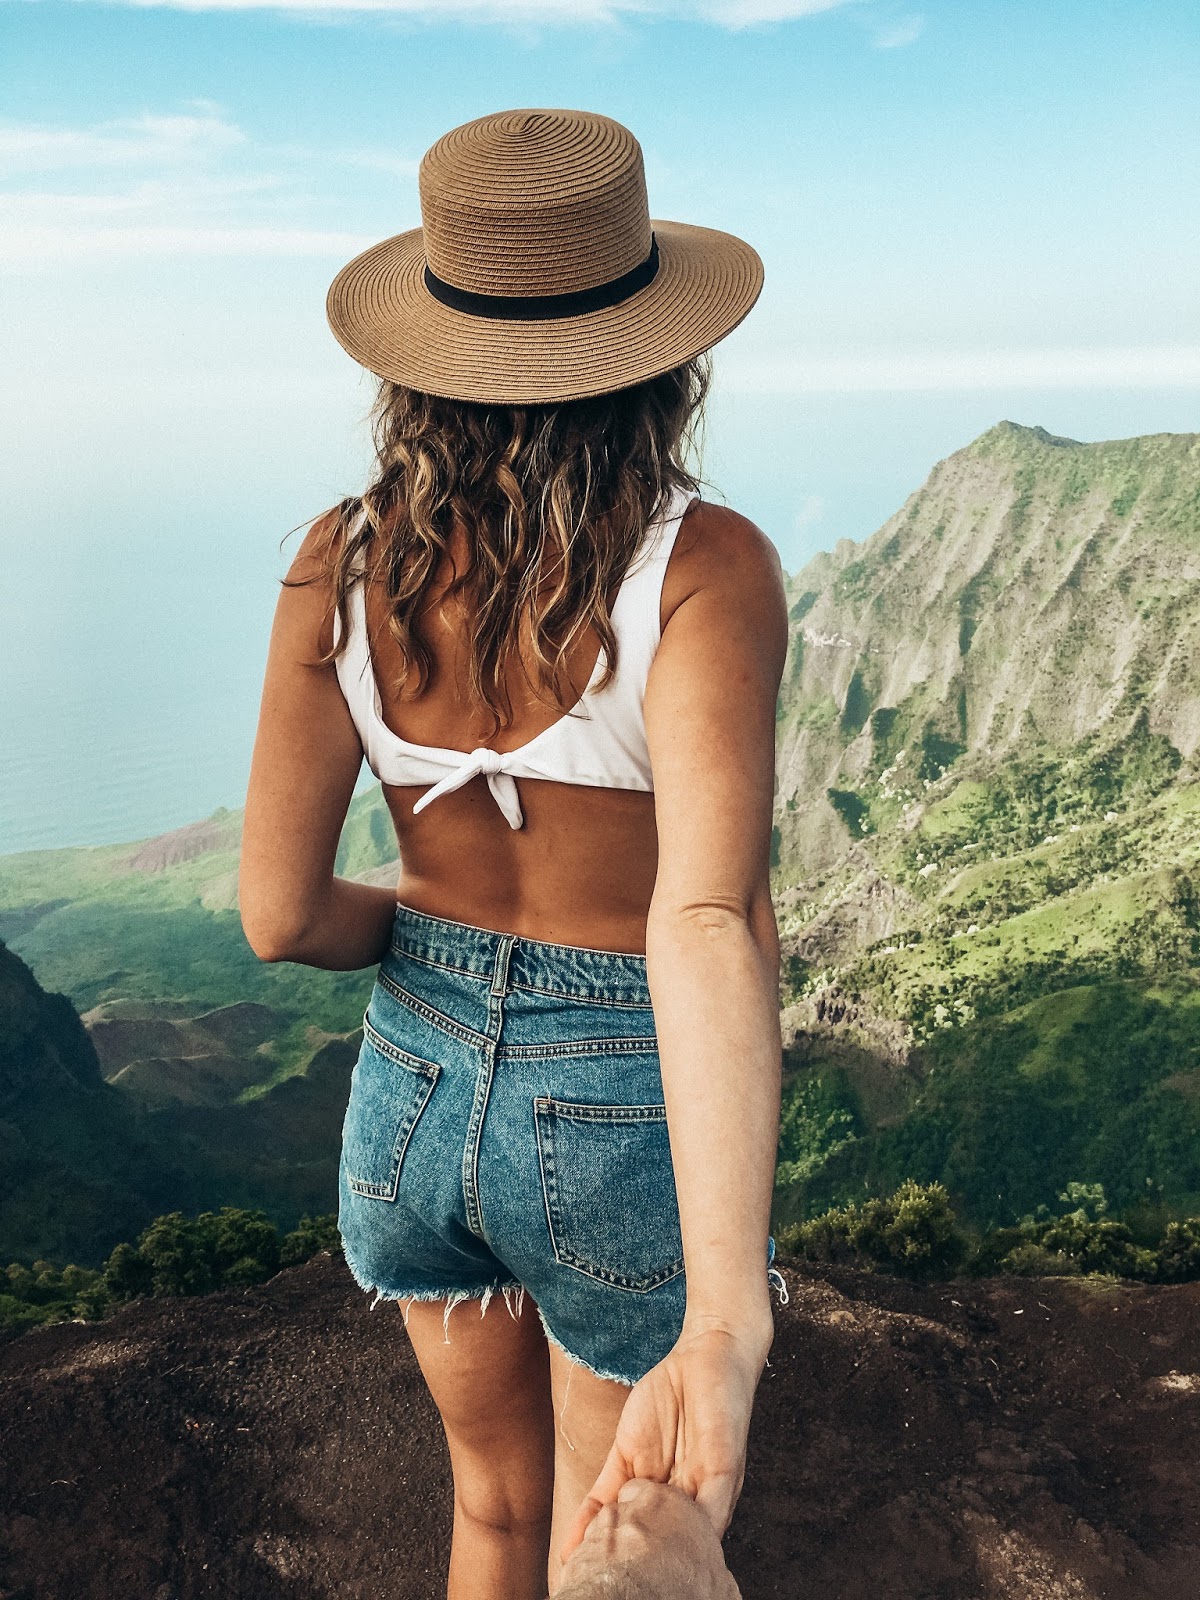 Kauai Travel Guide by popular Colorado travel blogger Eat Pray Wear Love